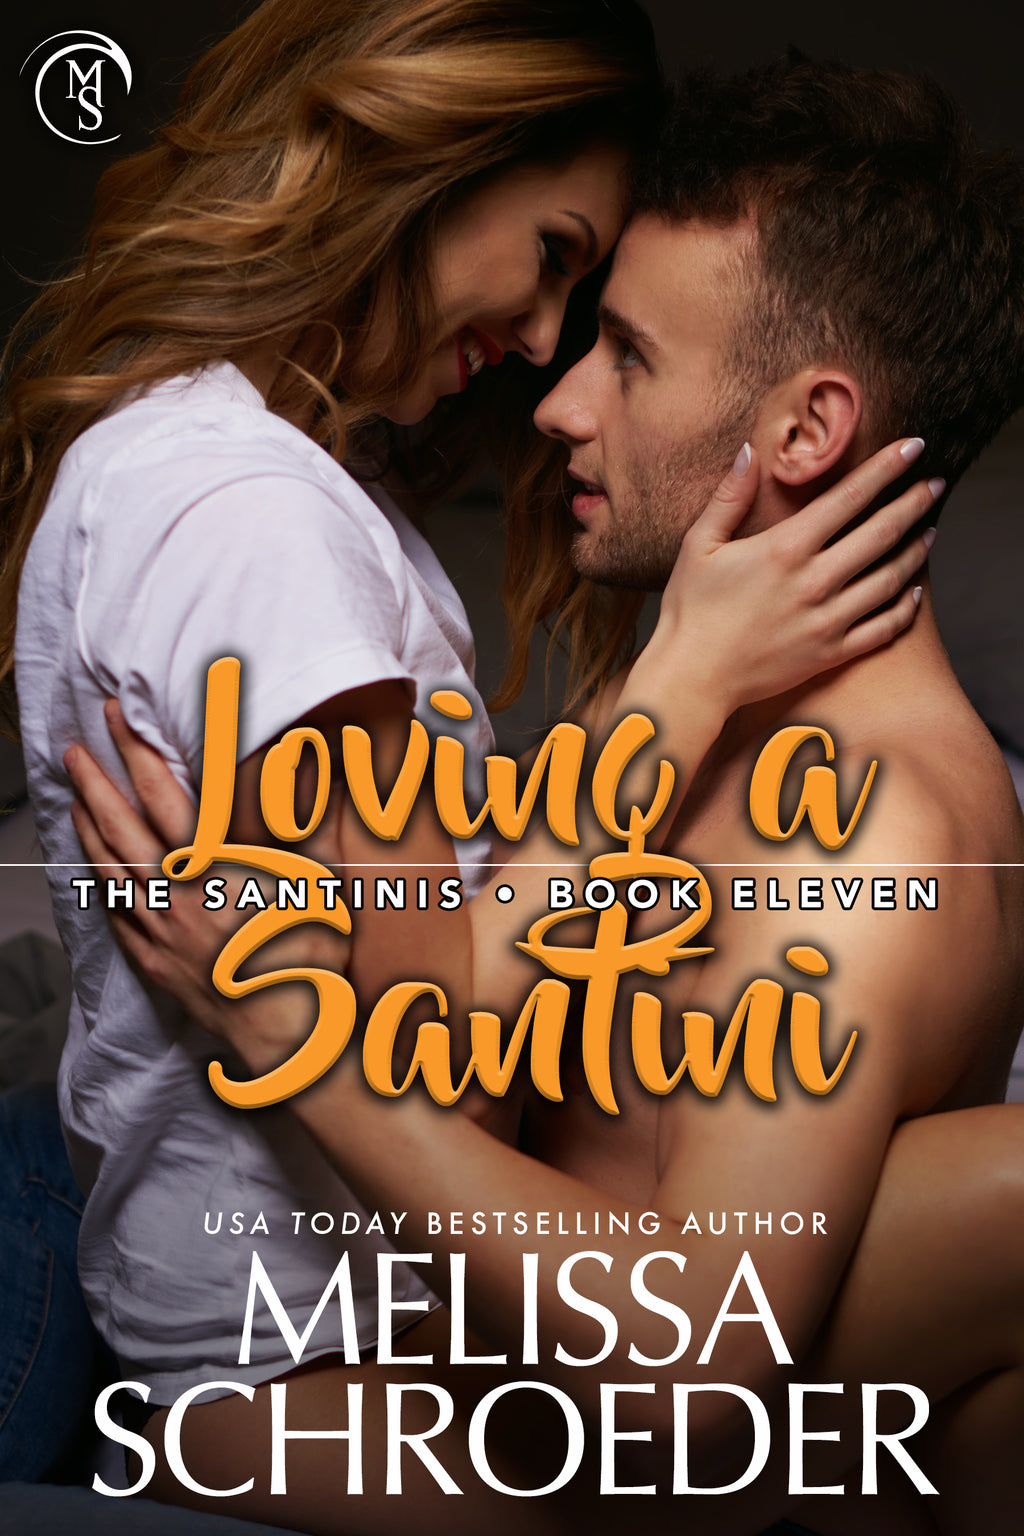 Loving for a Santini